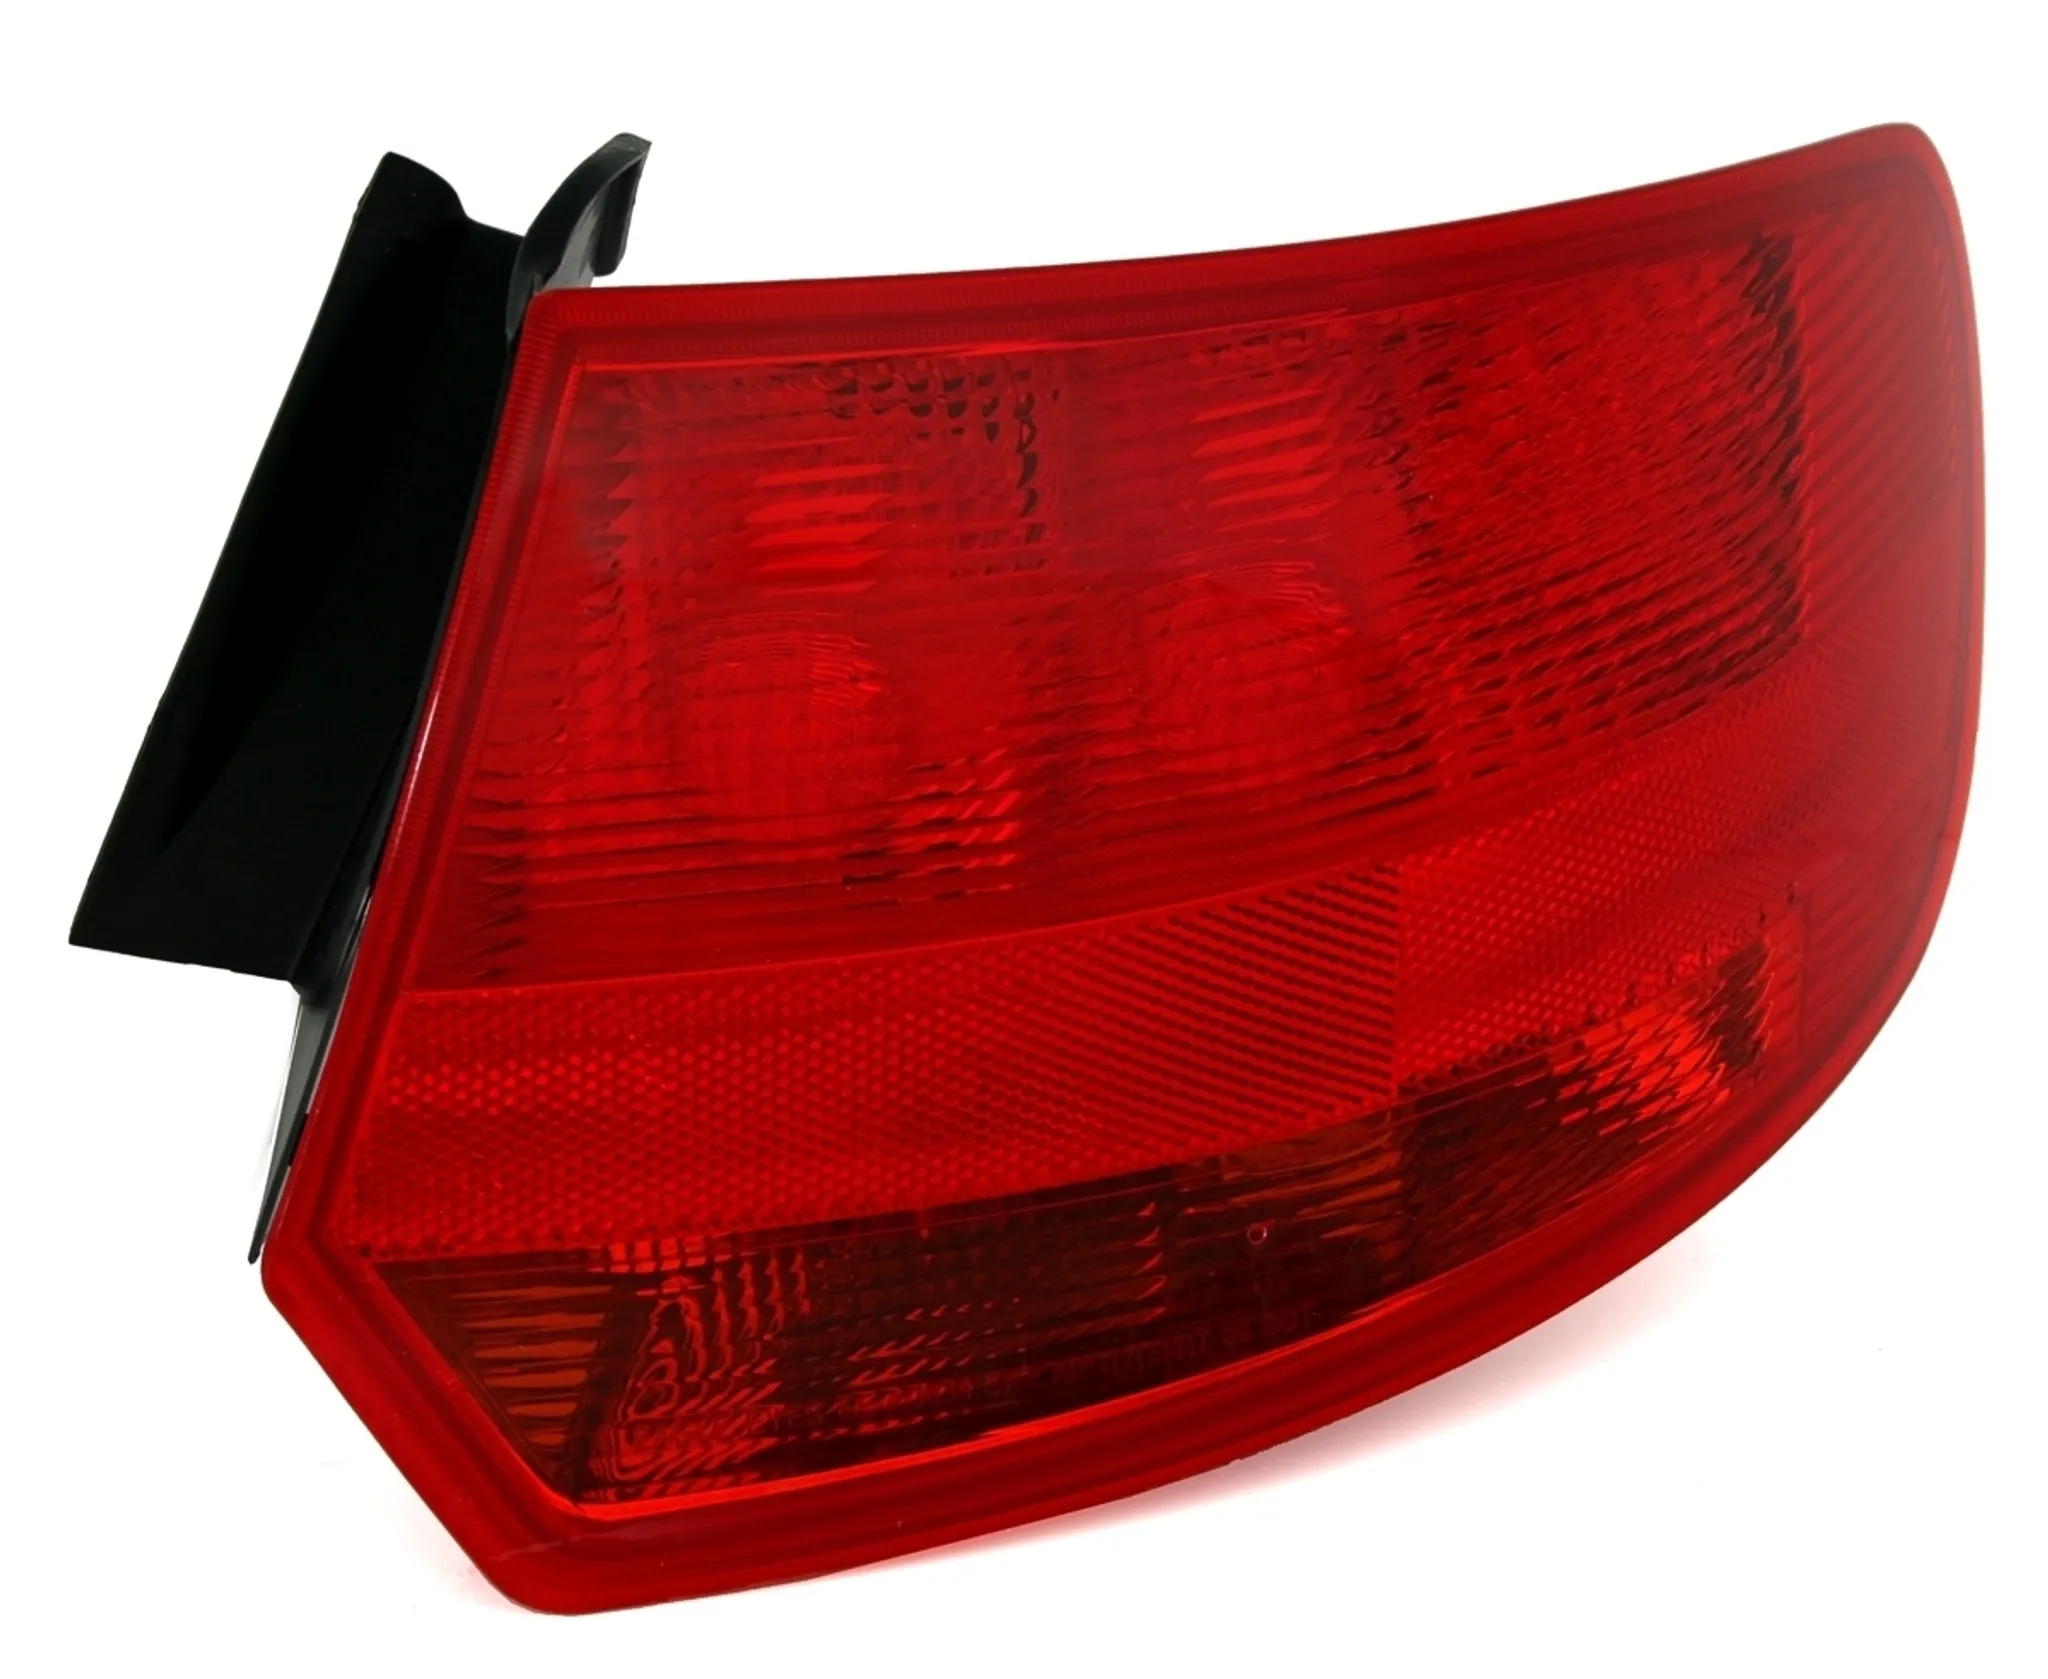 LED Lightbar Rückleuchten Set für Audi A3 8P Sportback Bj. 03-08 Rot/Smoke